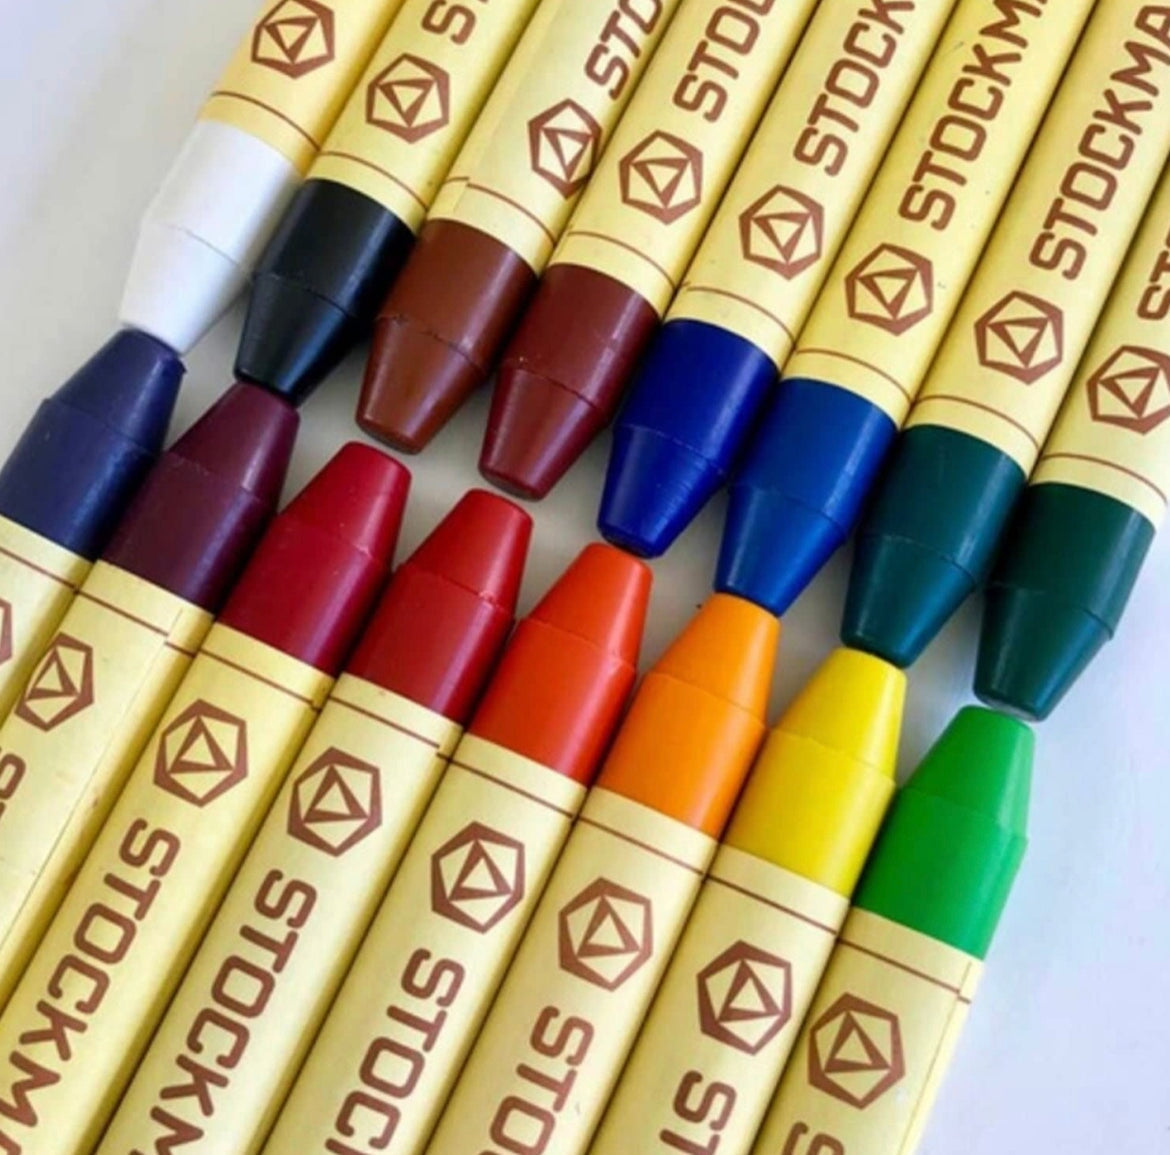 Stockmar Crayons, Box of 12, Single Color - Alder & Alouette